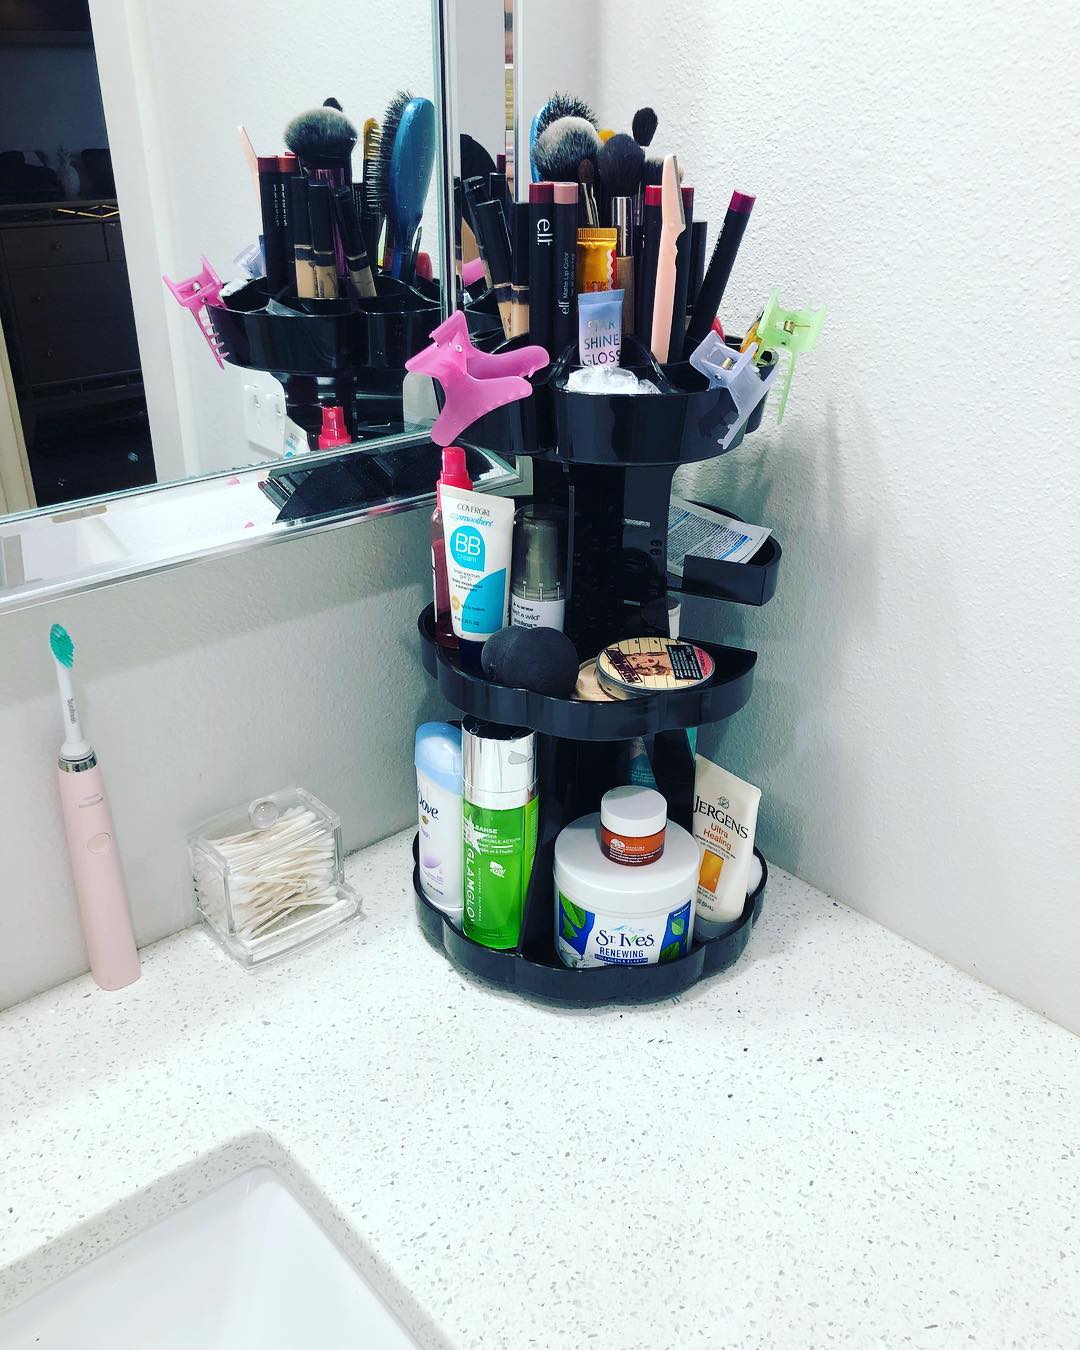 Three-tiered Storage Unit with Bathroom Supplies. Photo by Instagram user @amyday12